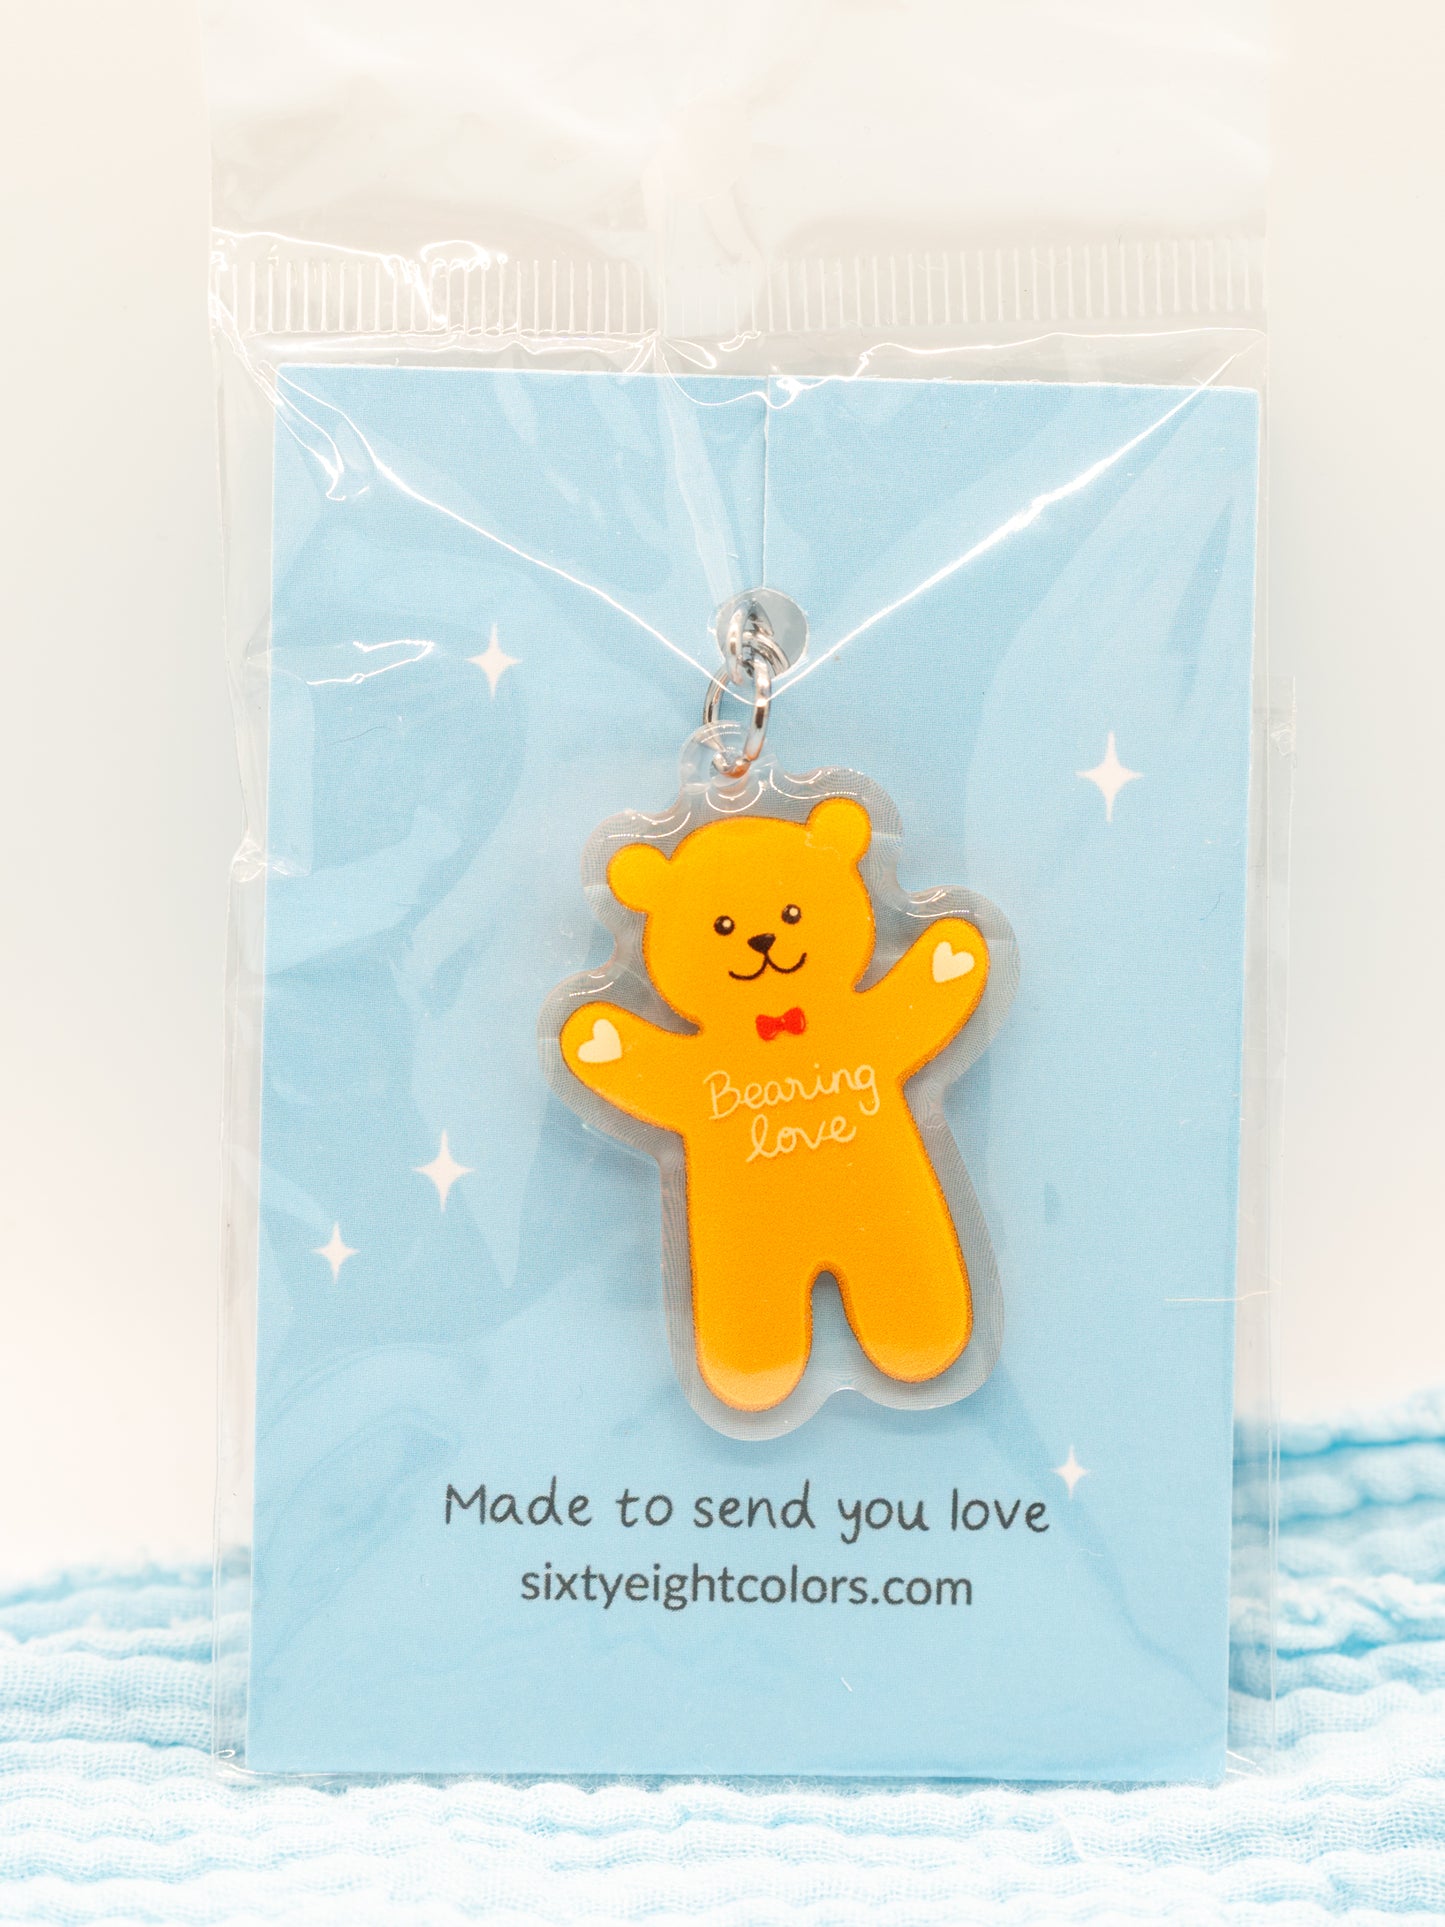 Ginger Bear Keychain